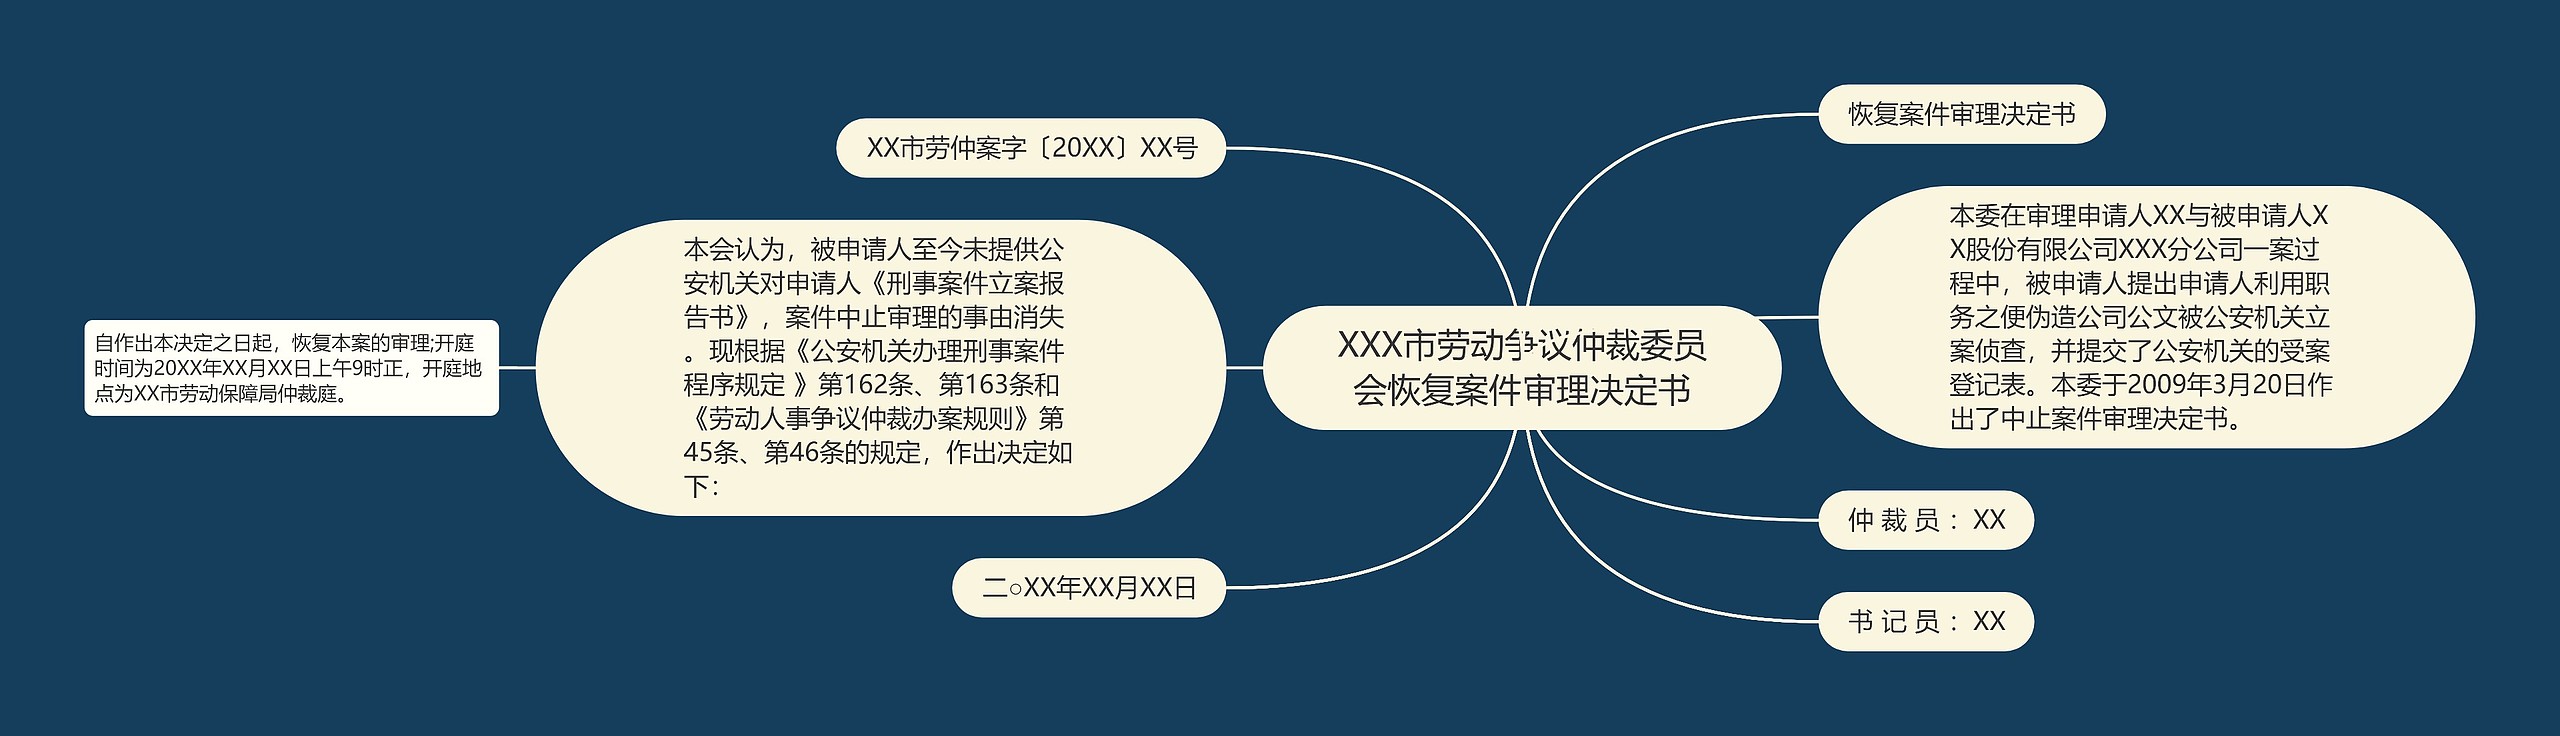 XXX市劳动争议仲裁委员会恢复案件审理决定书思维导图